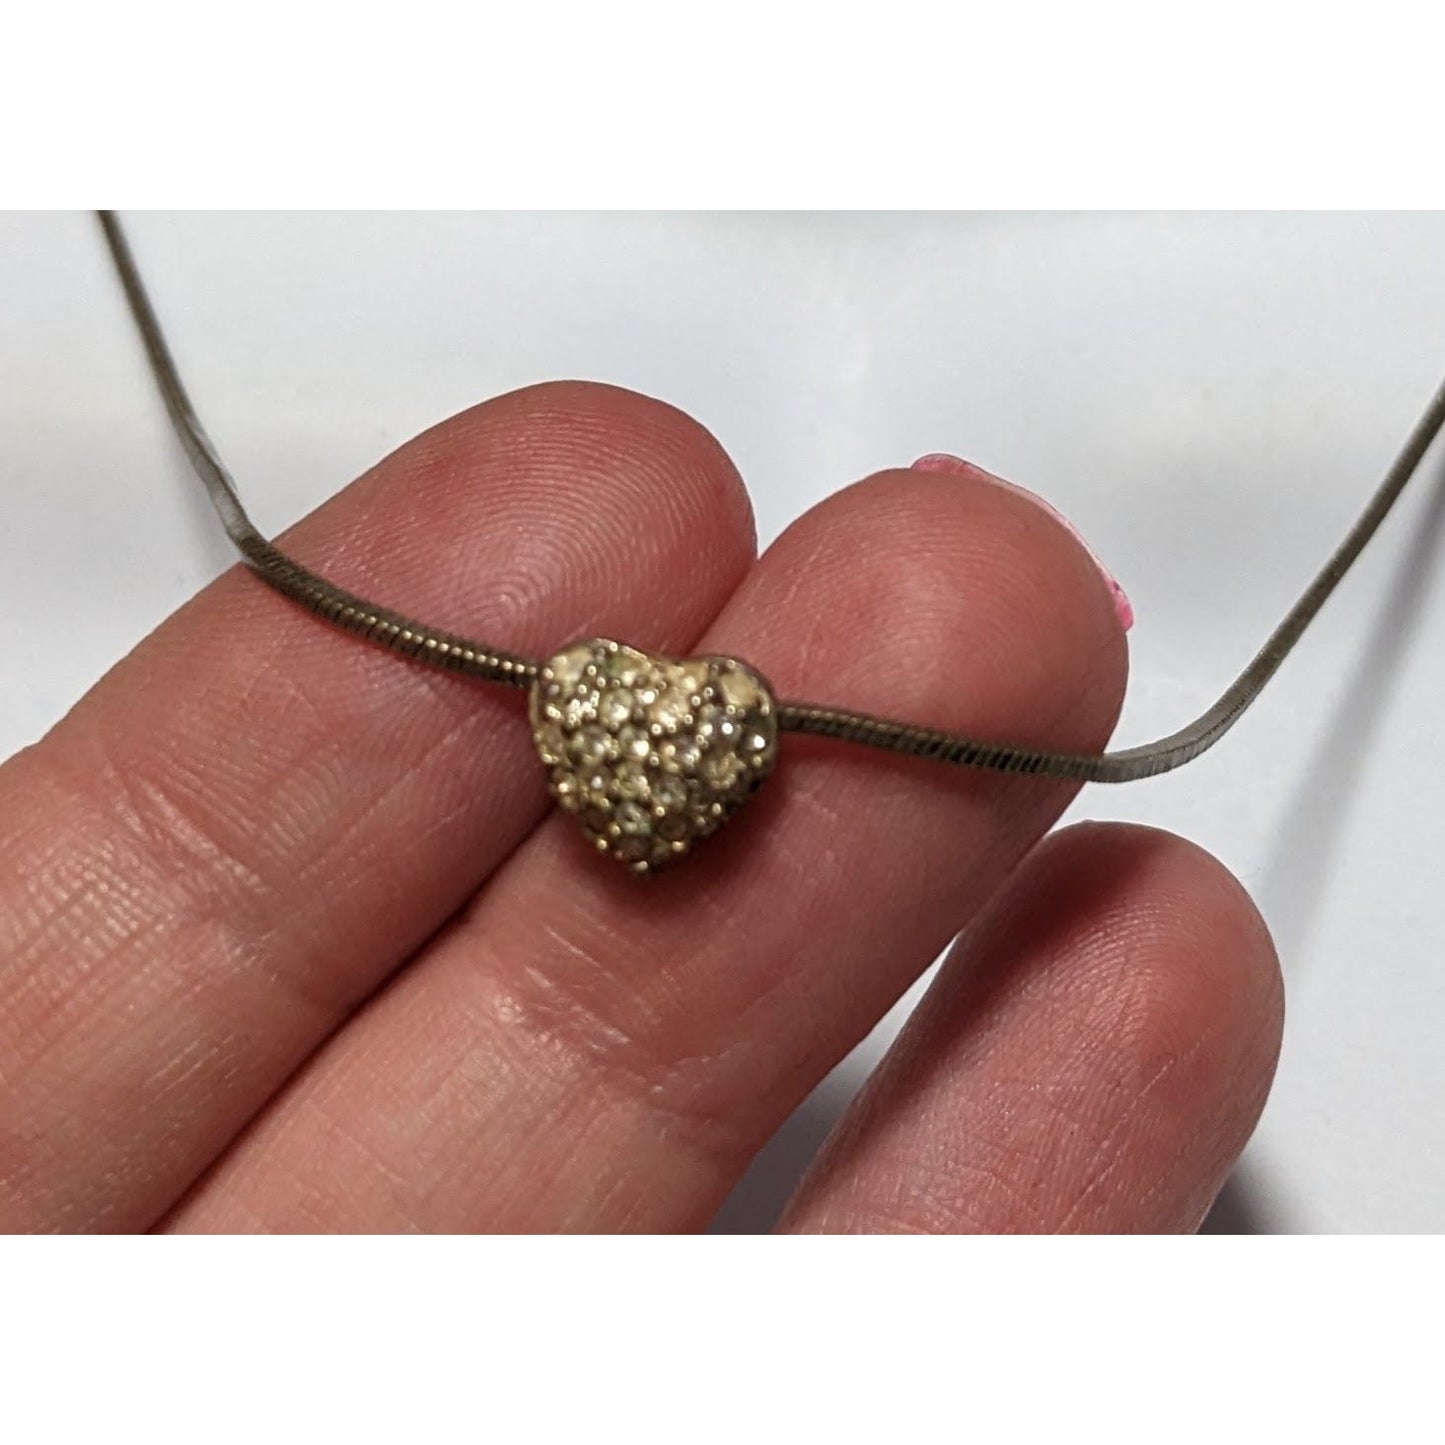 Premier Designs Minimalist Rhinestone Heart Necklace